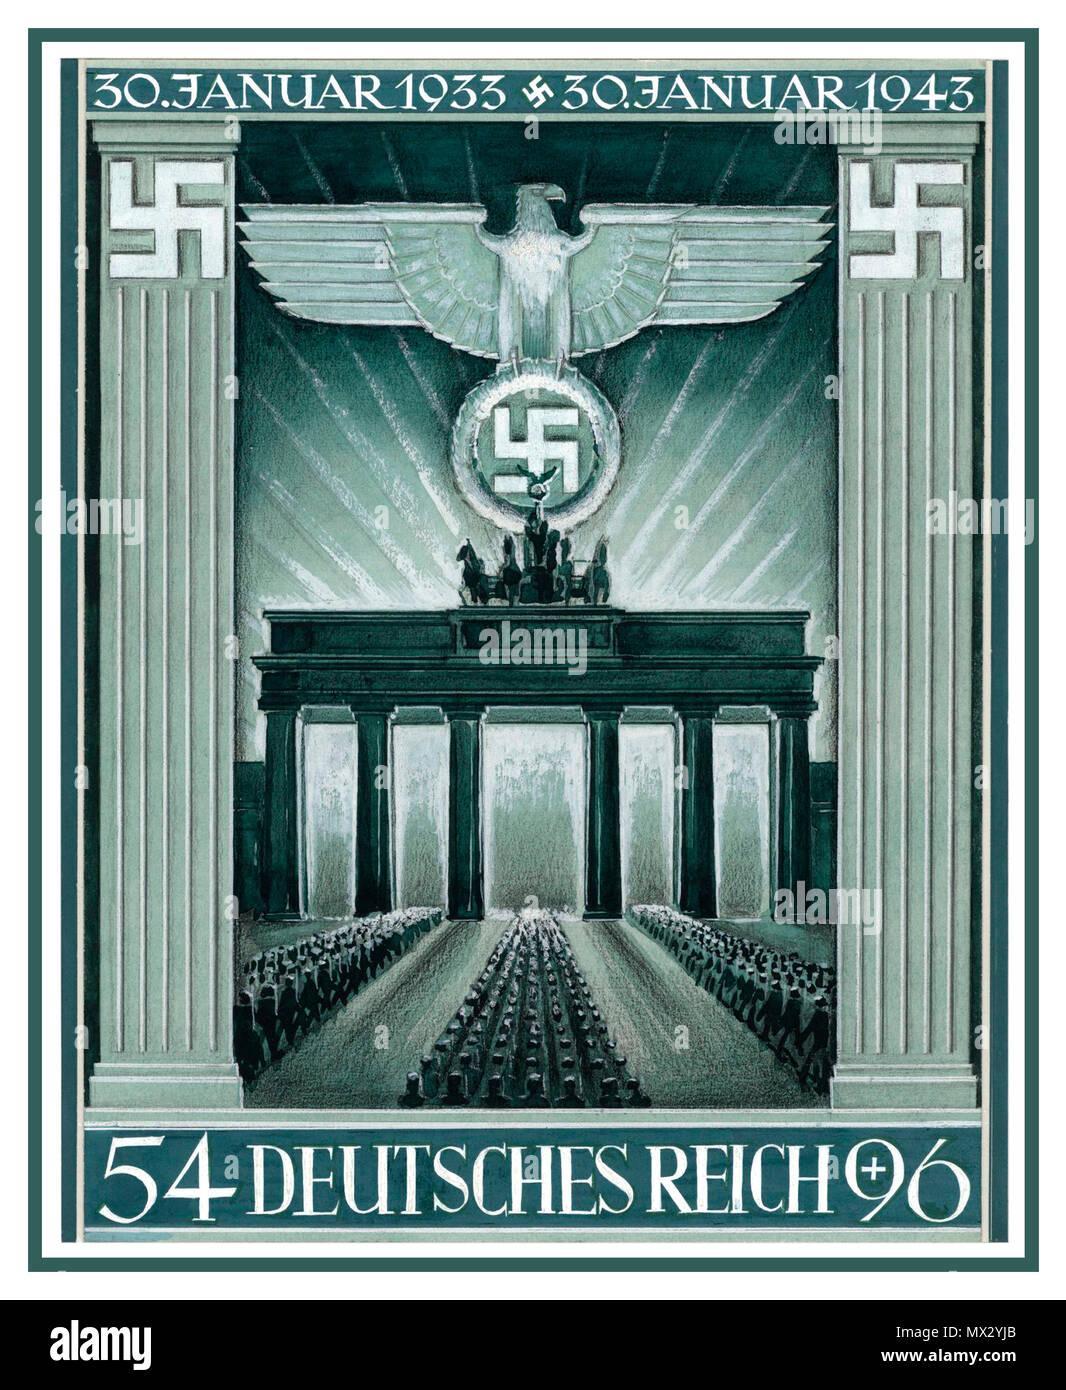 Vintage German Nazi postage stamp artwork propaganda Brandenburg Gate Berlin Nazi Germany 10th anniversary of the Nazi takeover by Adolf Hitler 1933-1943 artwork for Deutsches Reich commemorative stamp first day of issue Jan 1943 Graphics by G. Klein Stock Photo